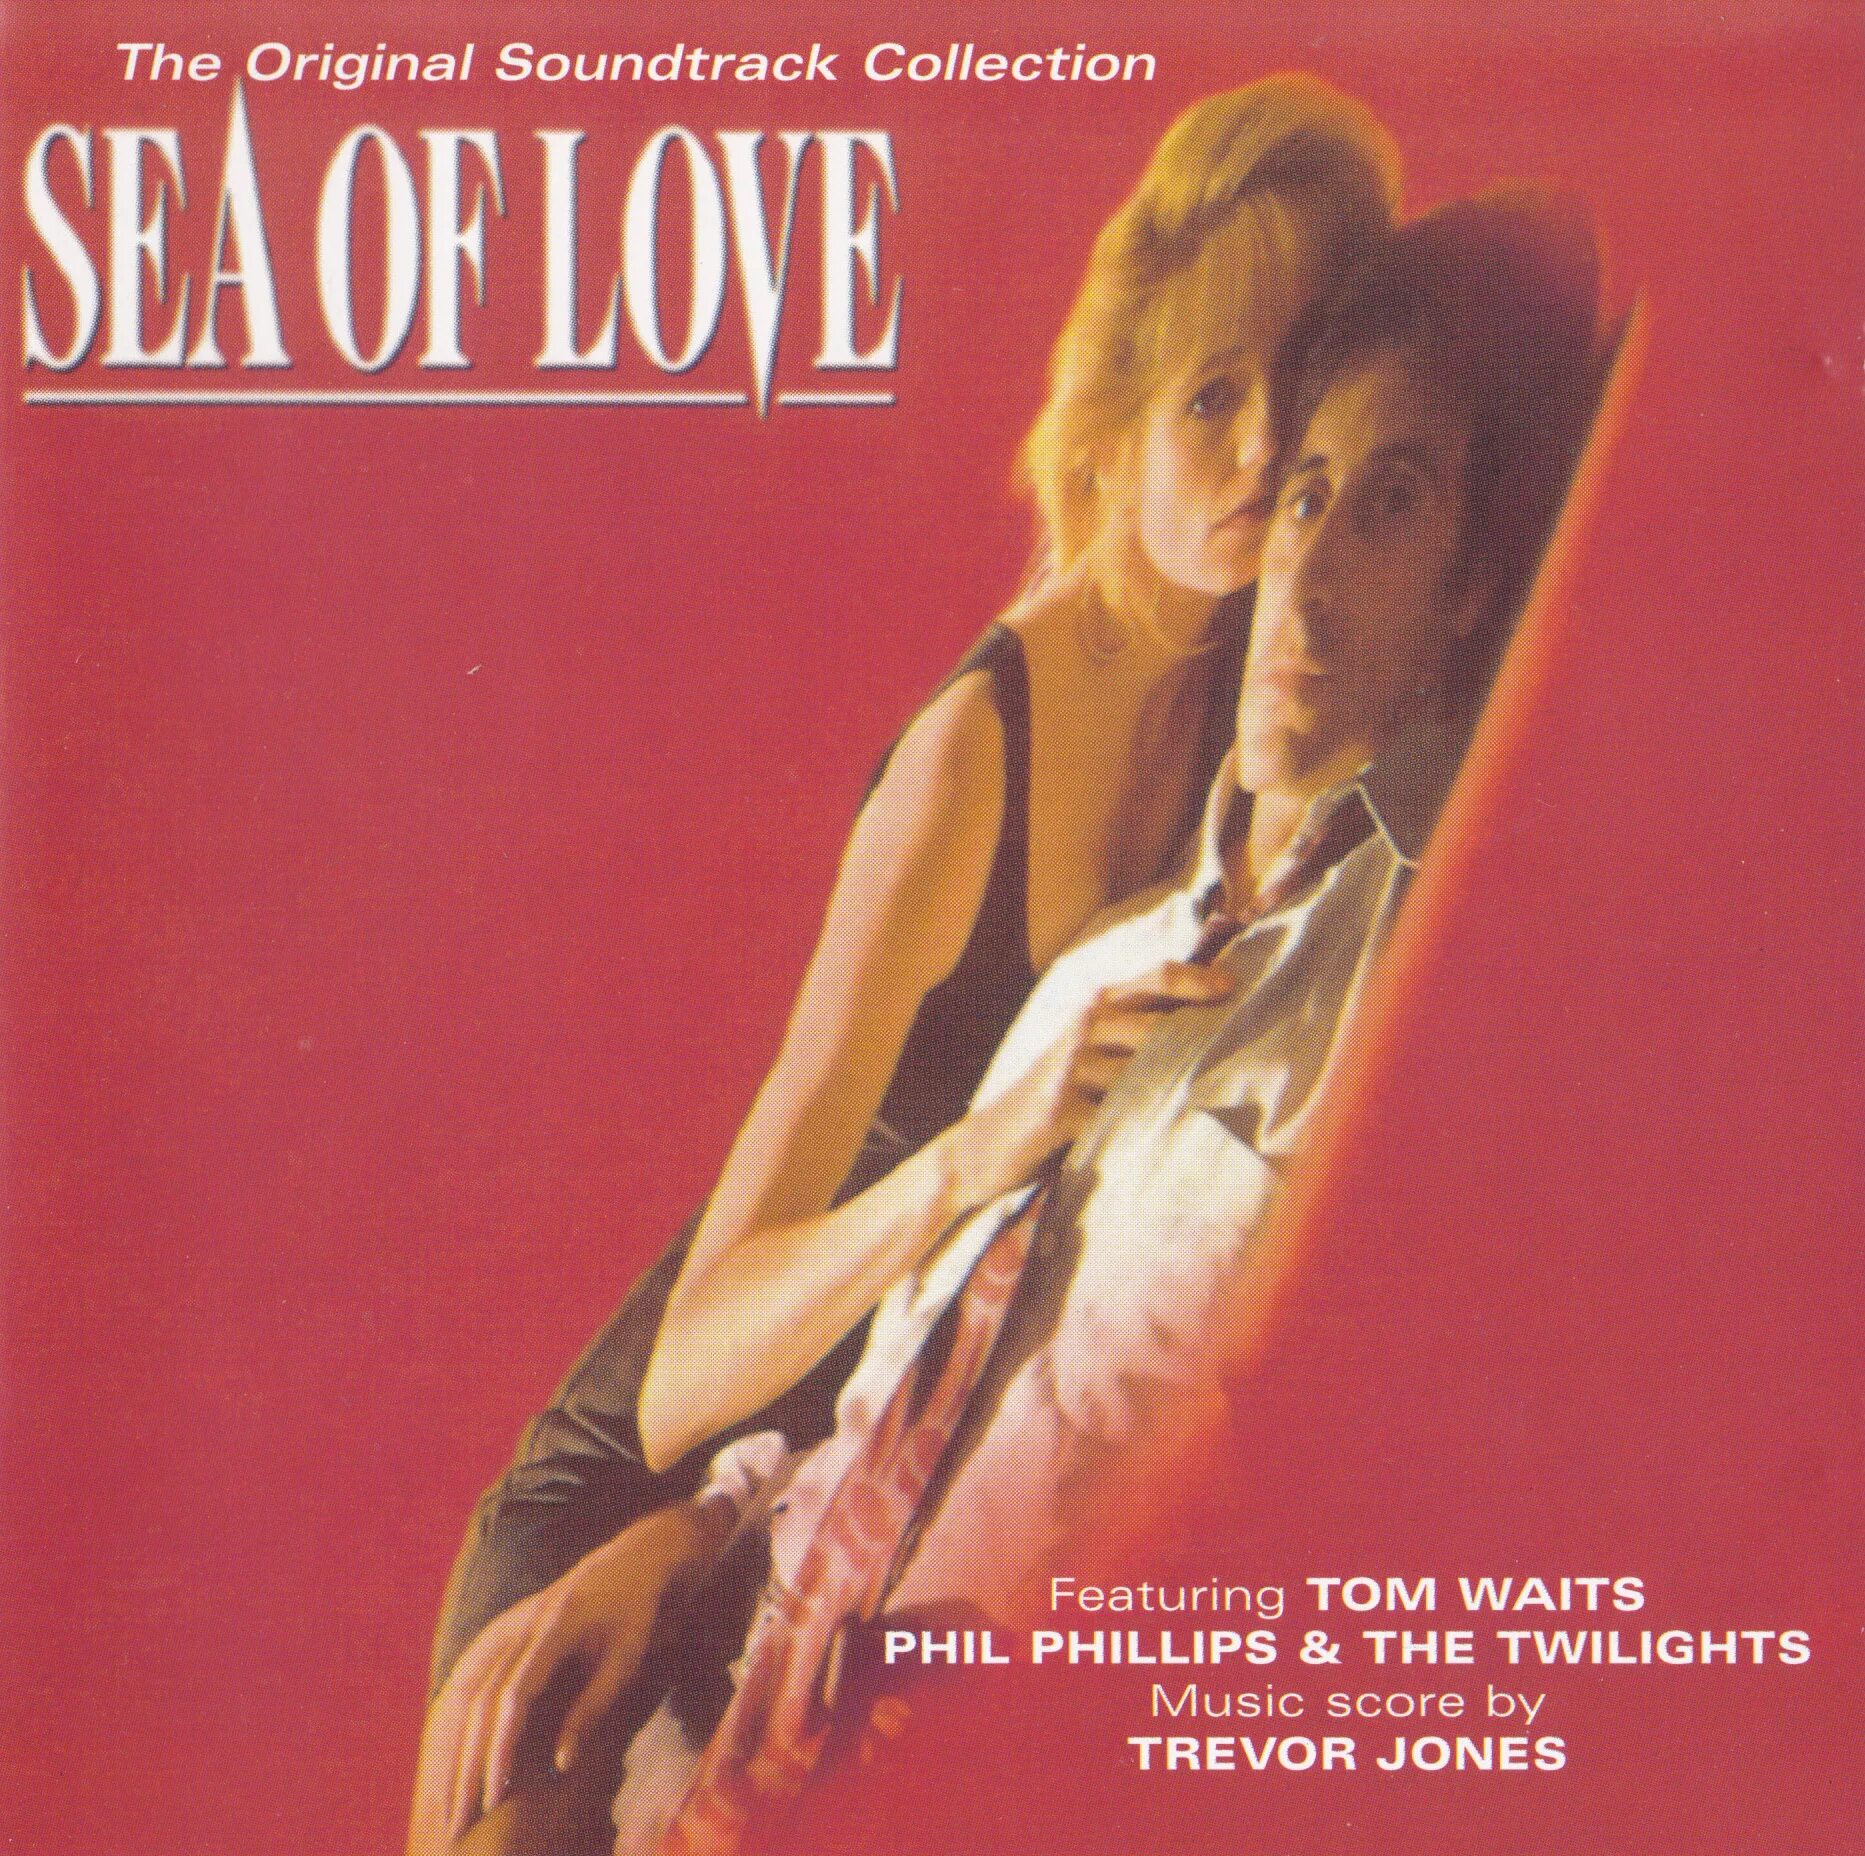 Sea of Love 1989. Море любви / Sea of Love (1989) Постер. Эллен Баркин море любви. Шеф саундтреки